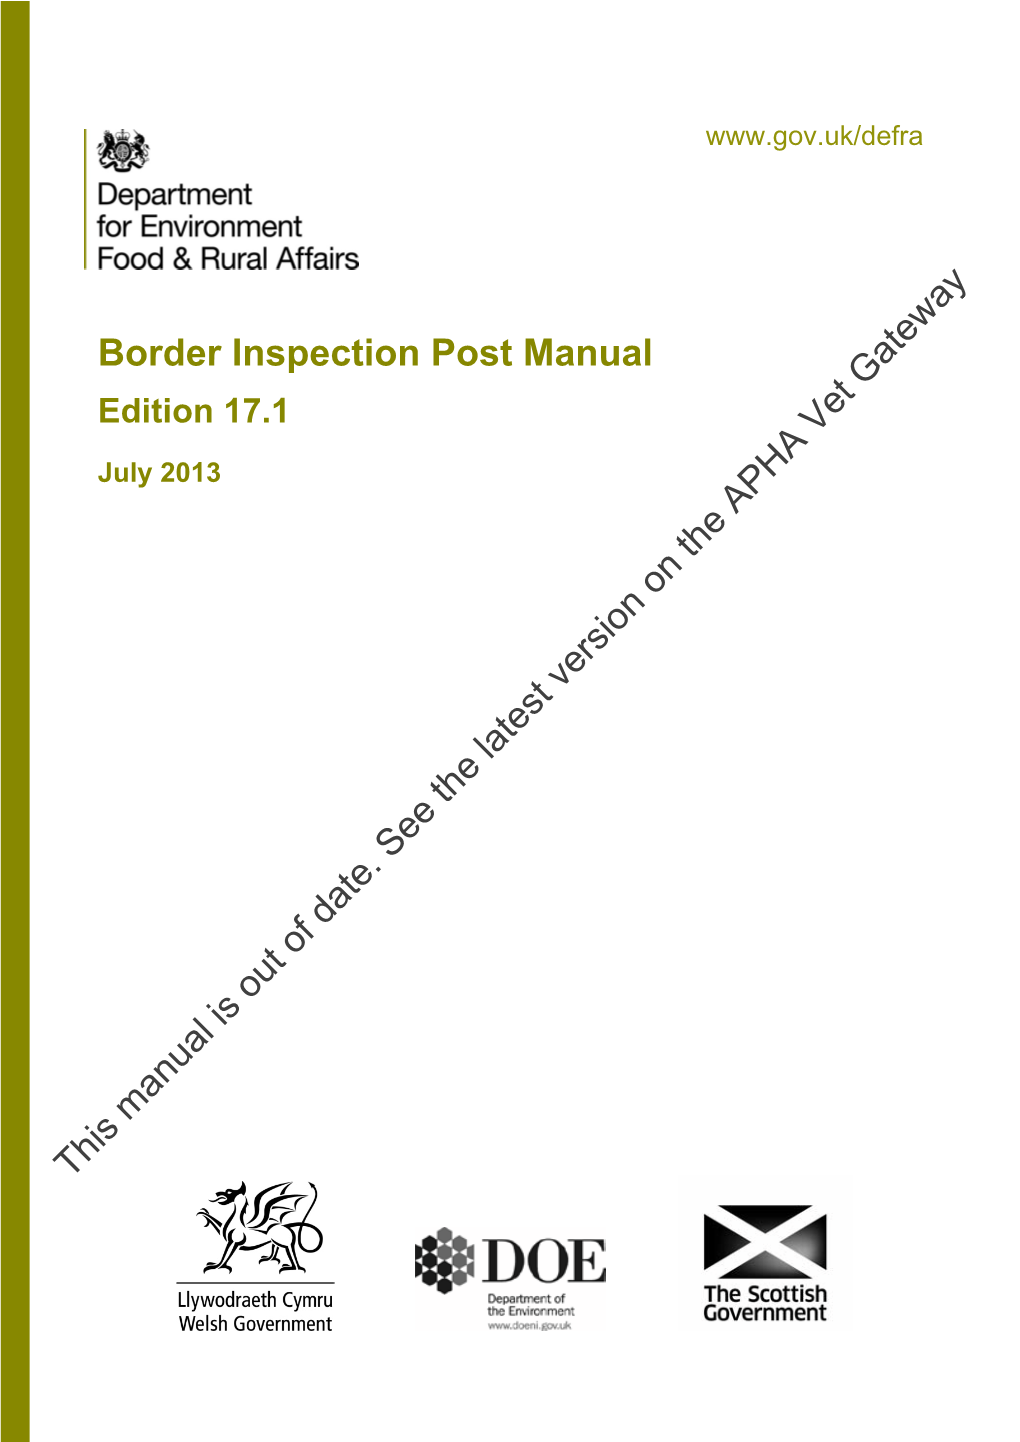 Border Inspection Post Manual Gateway Edition 17.1 Vet July 2013 APHA